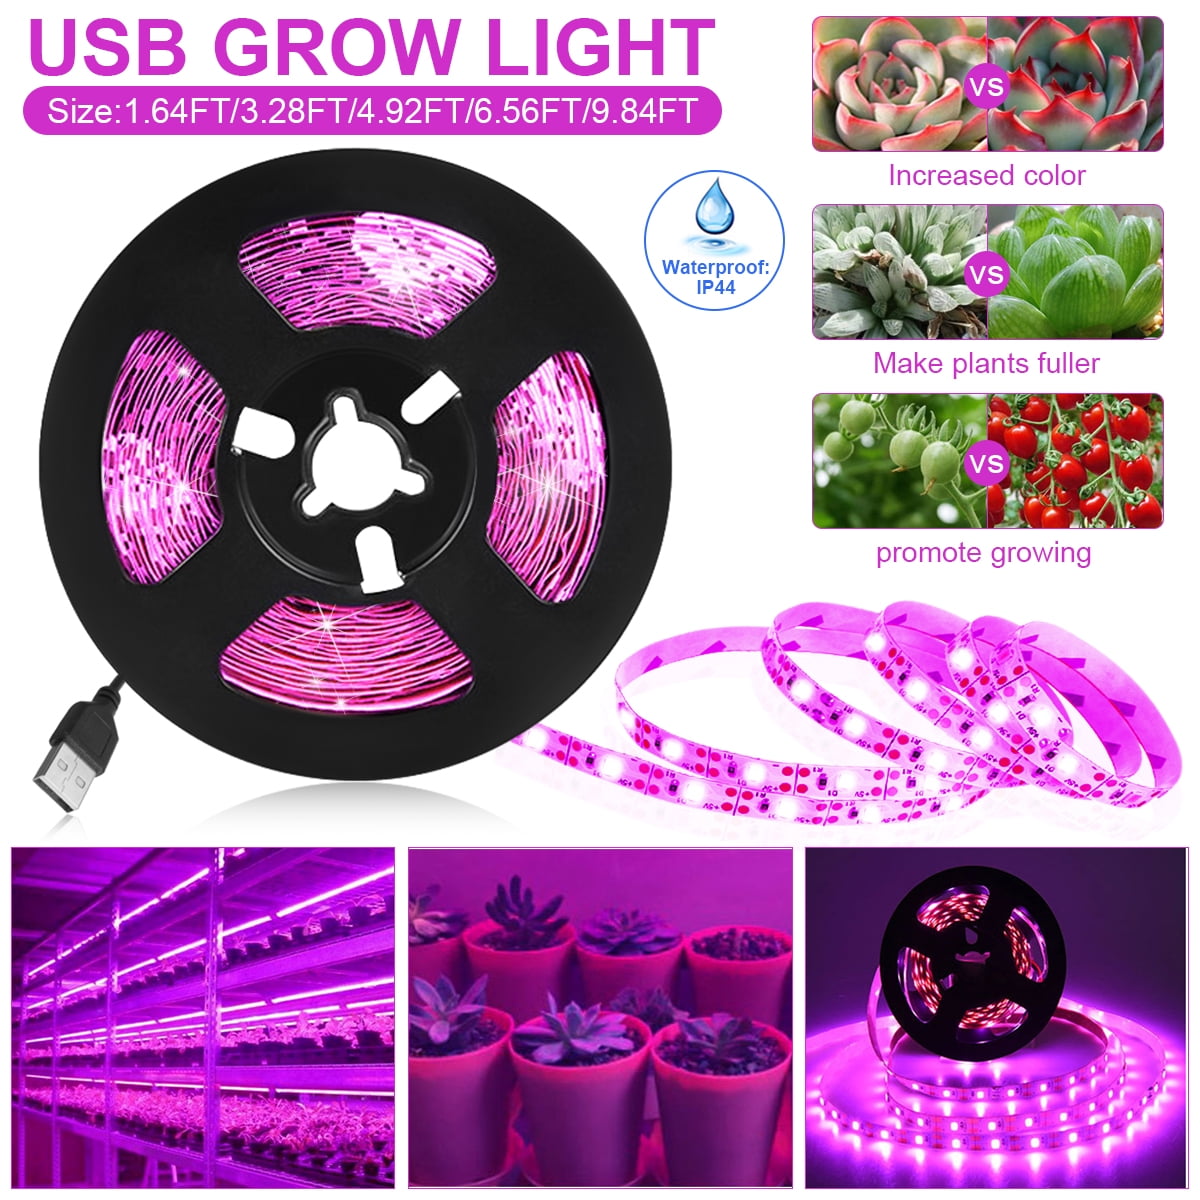 USB LED Grow Light Strip Full Spectrum 2835 Chip Lamp For Indoor Plant Growing 